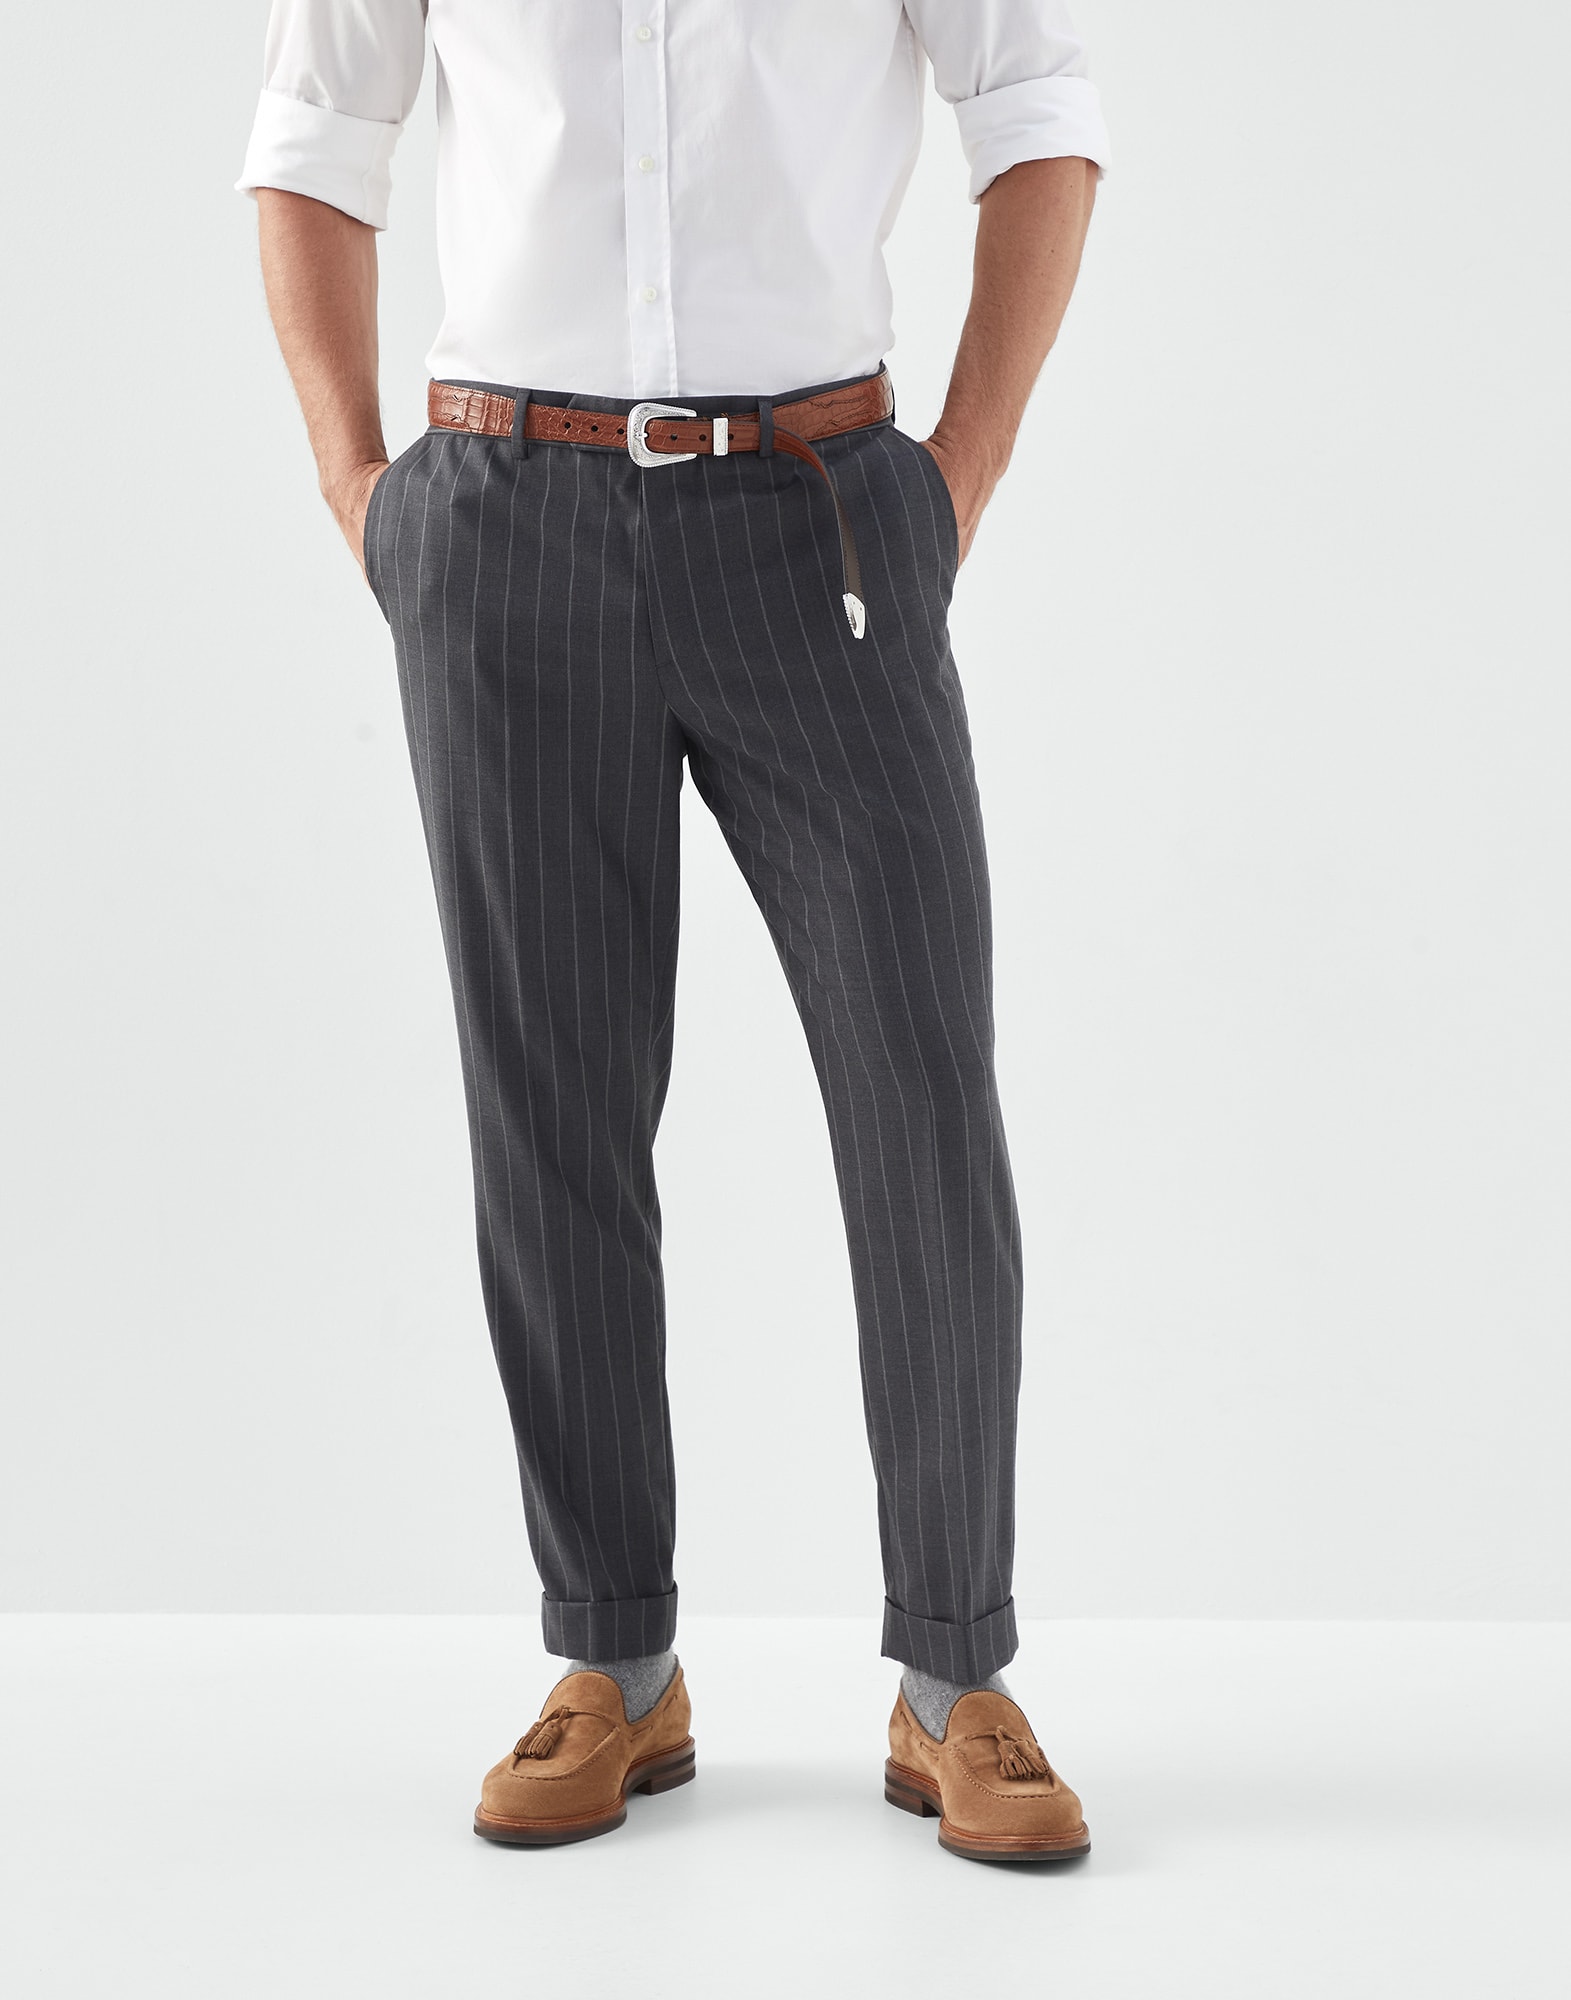 Chalk stripe trousers (232MG465PA0Z) for Man | Brunello Cucinelli